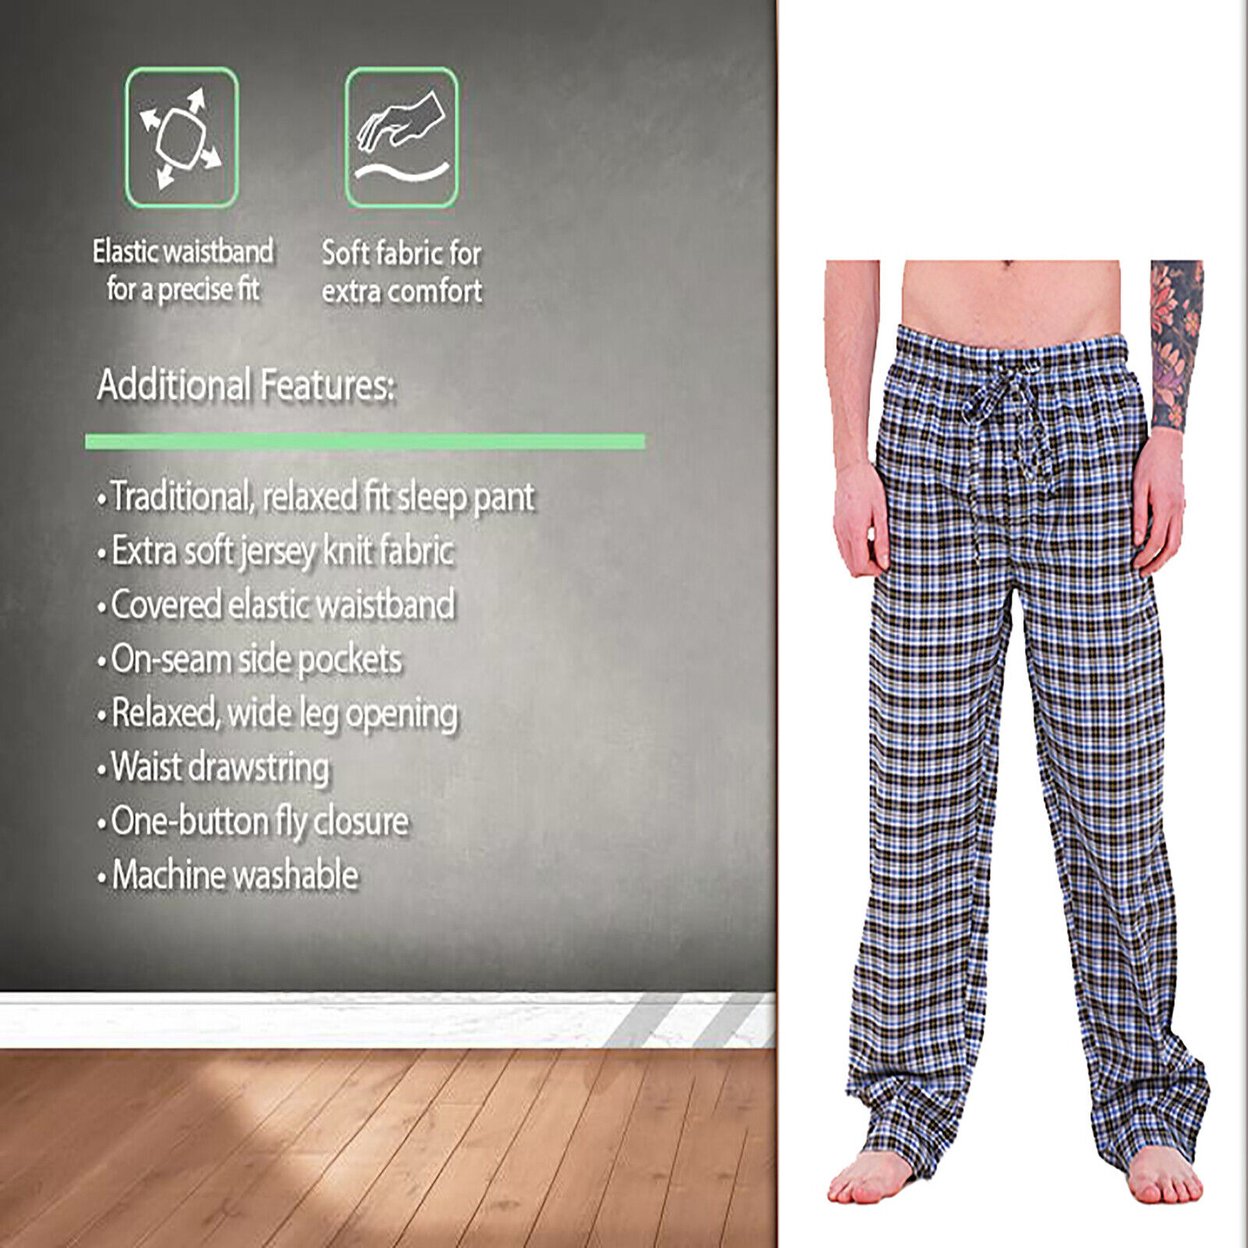 4-Pack: Men's Ultra-Soft Plaid Cotton Jersey Knit Comfy Sleep Lounge Pajama Pants - Xx-large